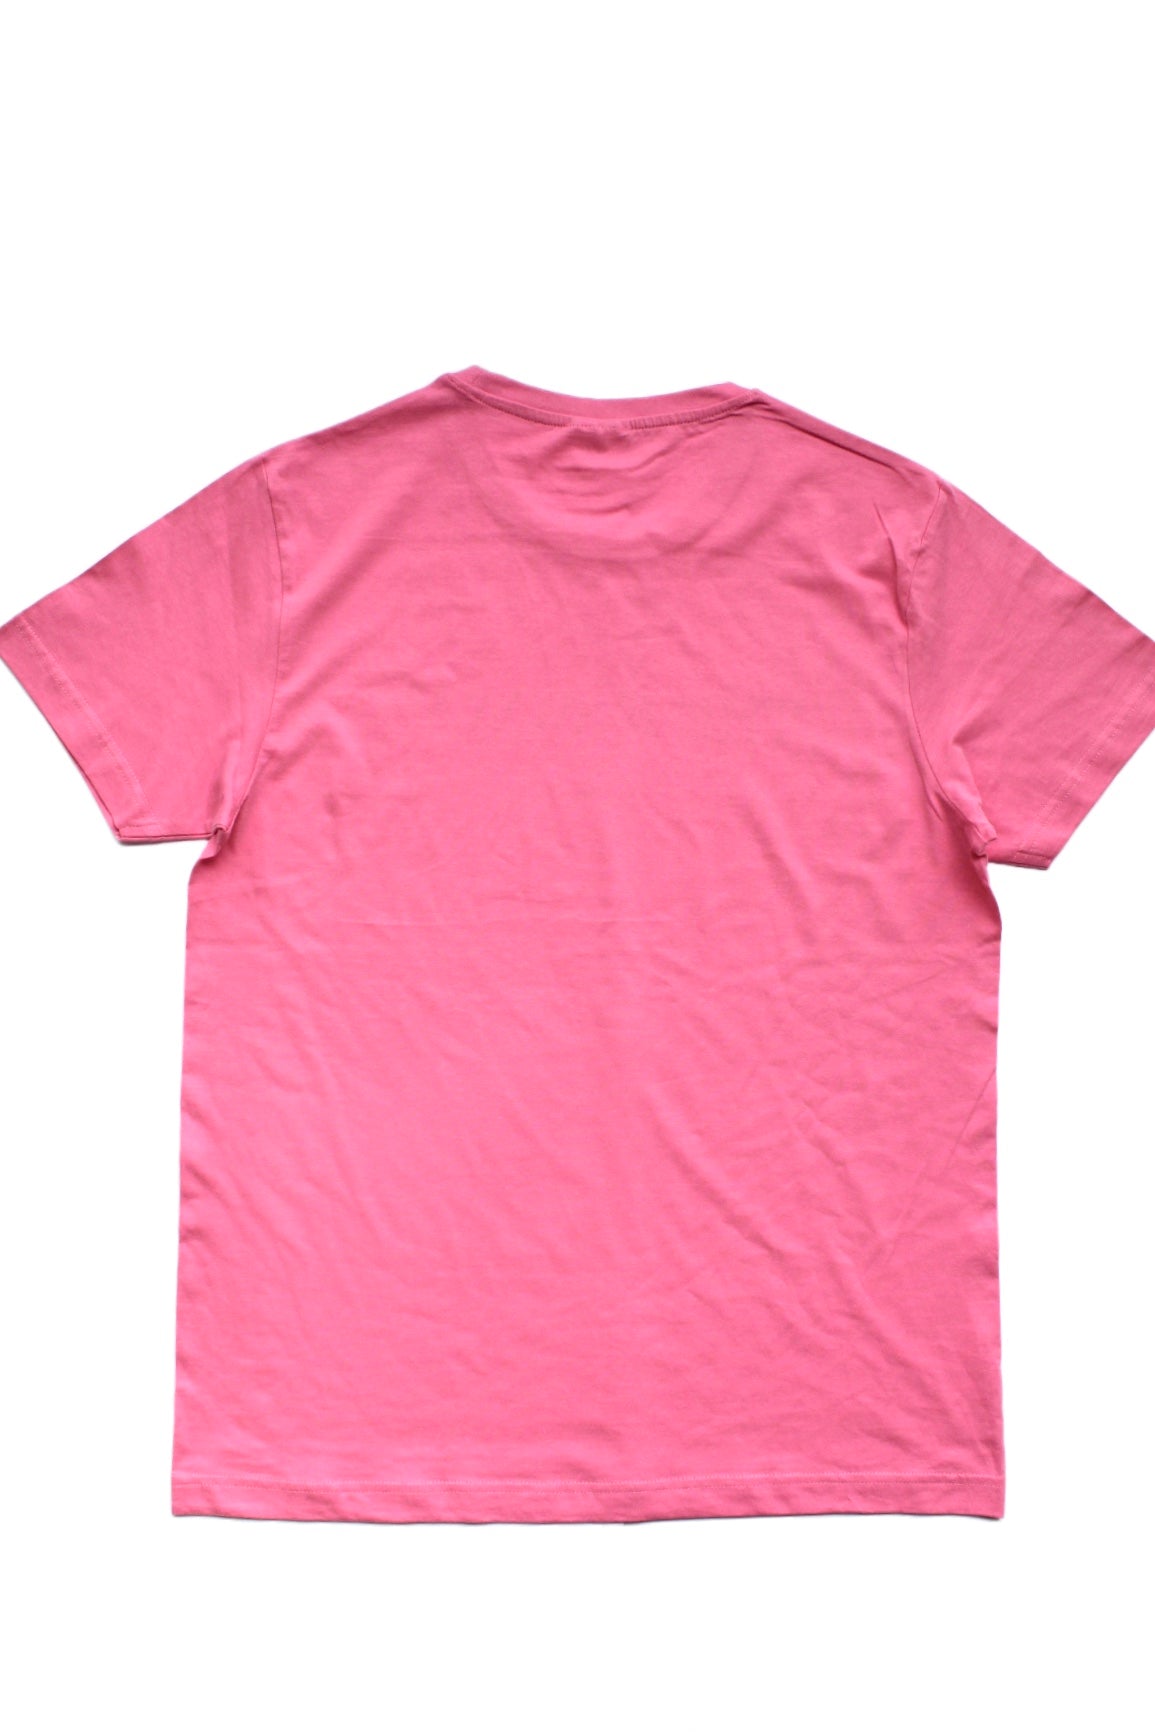 The Jordaan Amsterdam T-shirt, Pink Green 